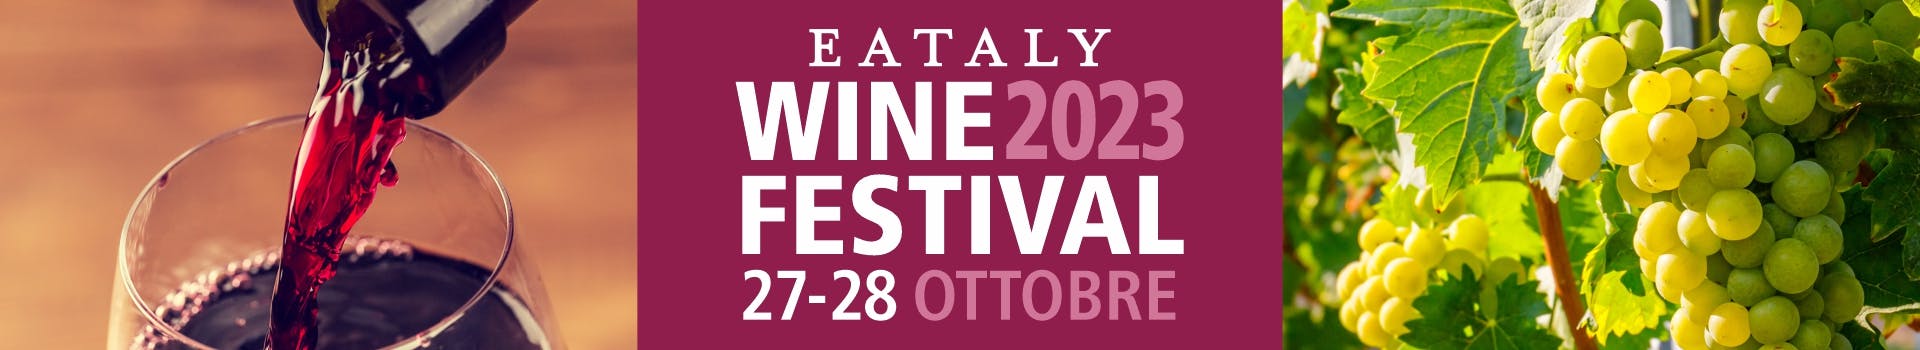 Wine Festival Eataly Roma